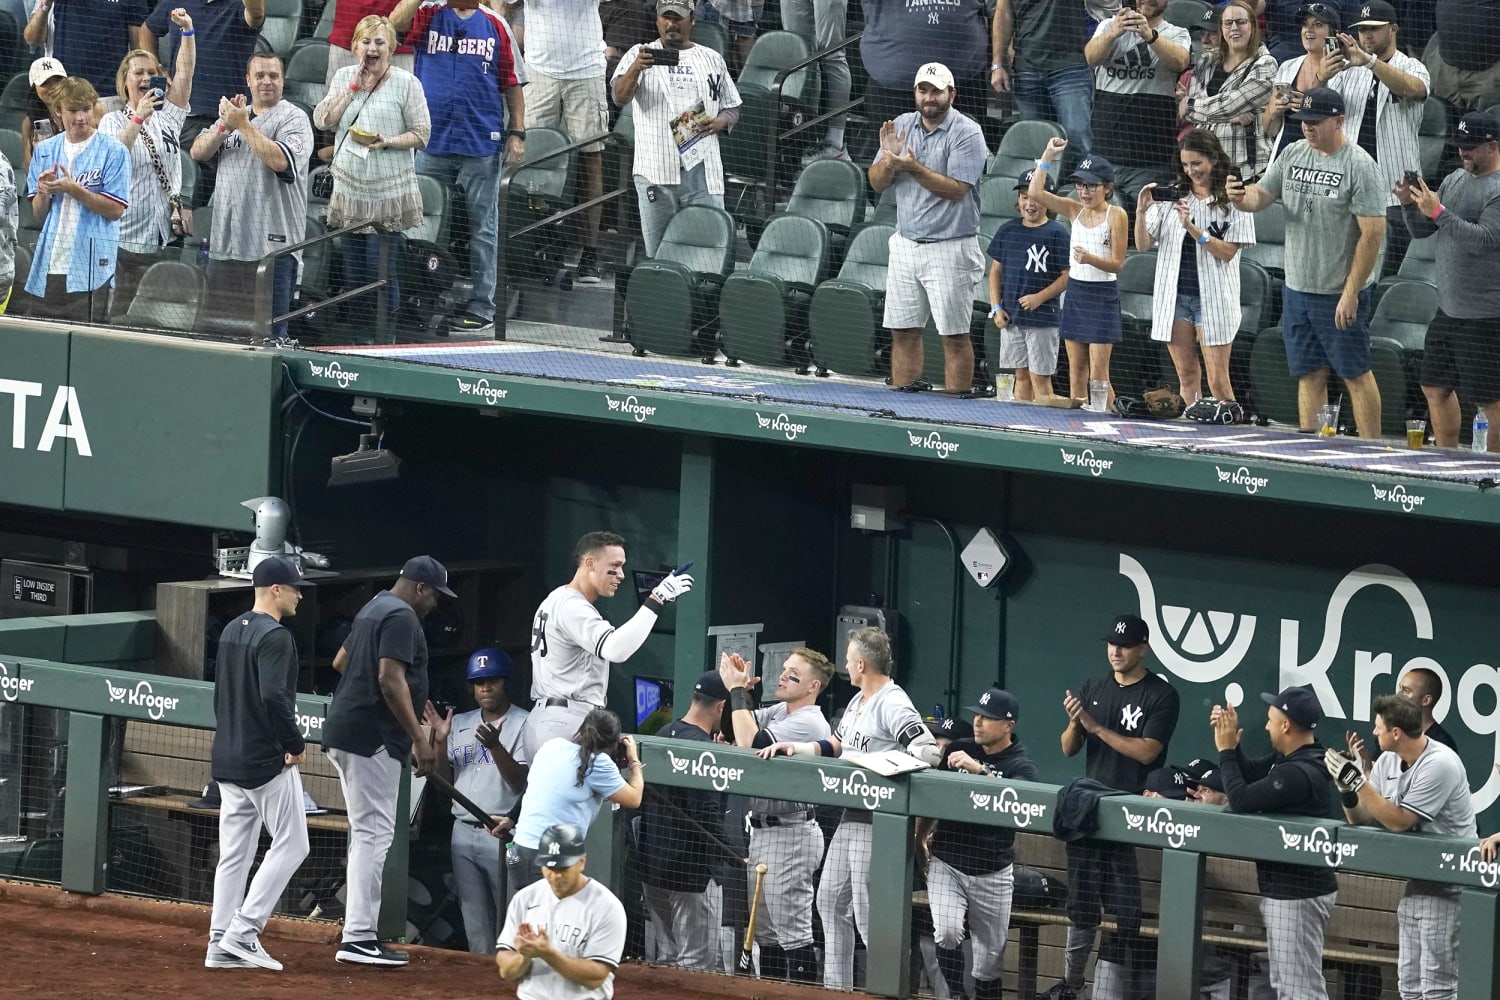 Inside Yankees slugger Aaron Judge's pursuit of home run 62